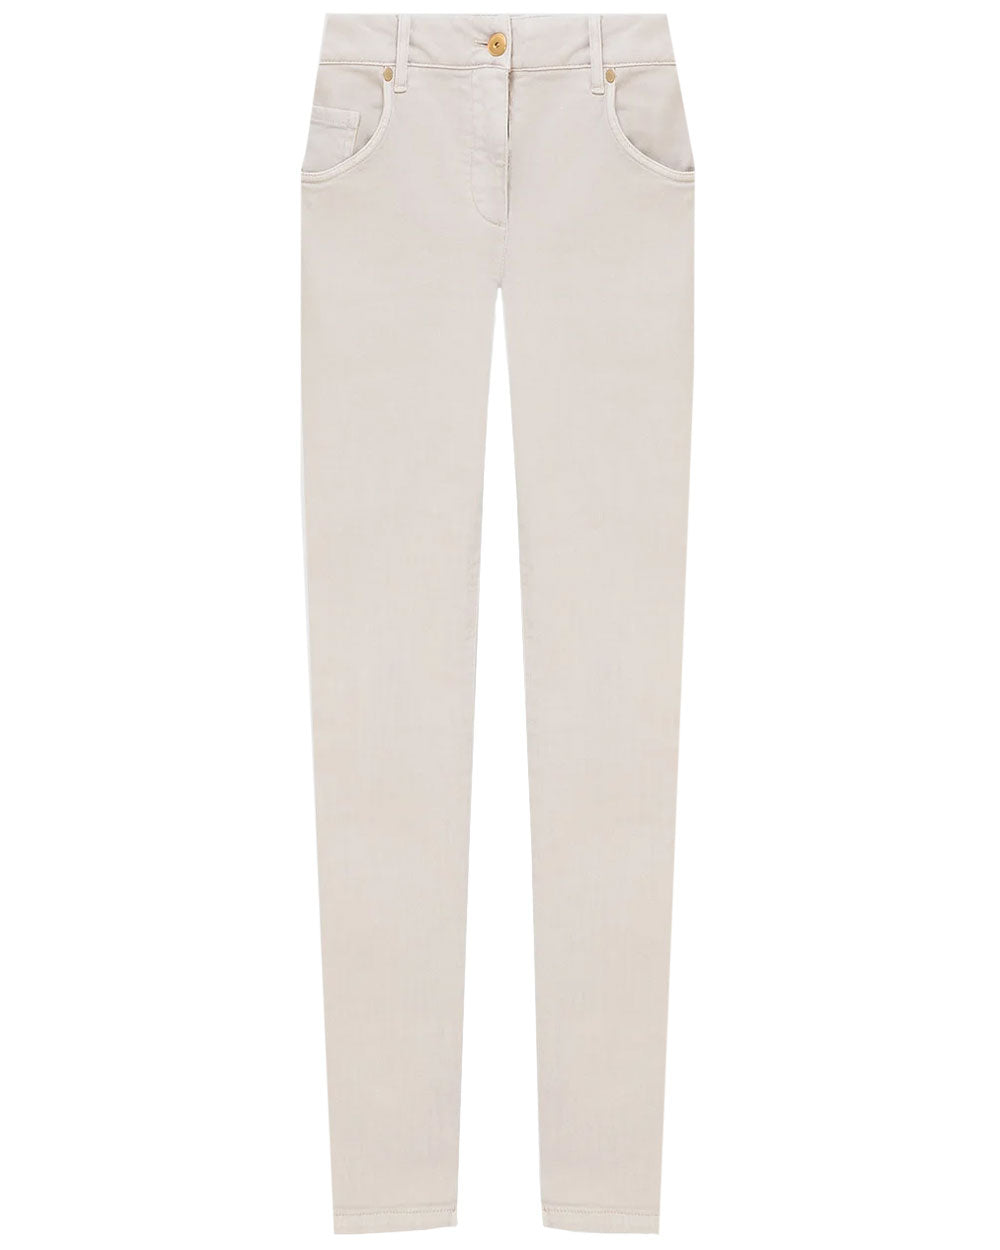 Warm White Garment Dyed Skinny Jean